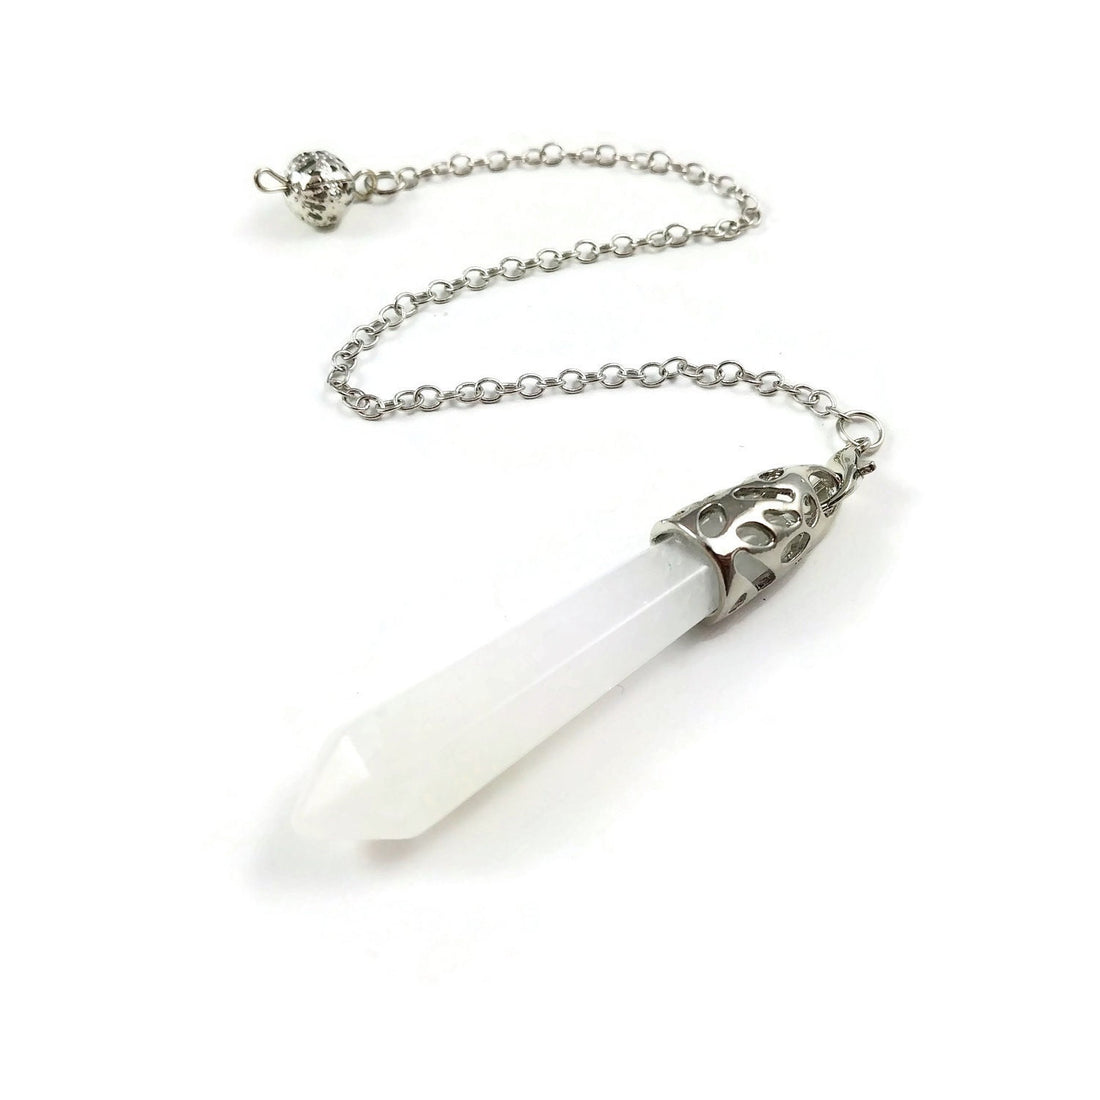 Natural quartz pendulum, Crystal dowsing pendulum, White magic divination tool, Witch healing gift